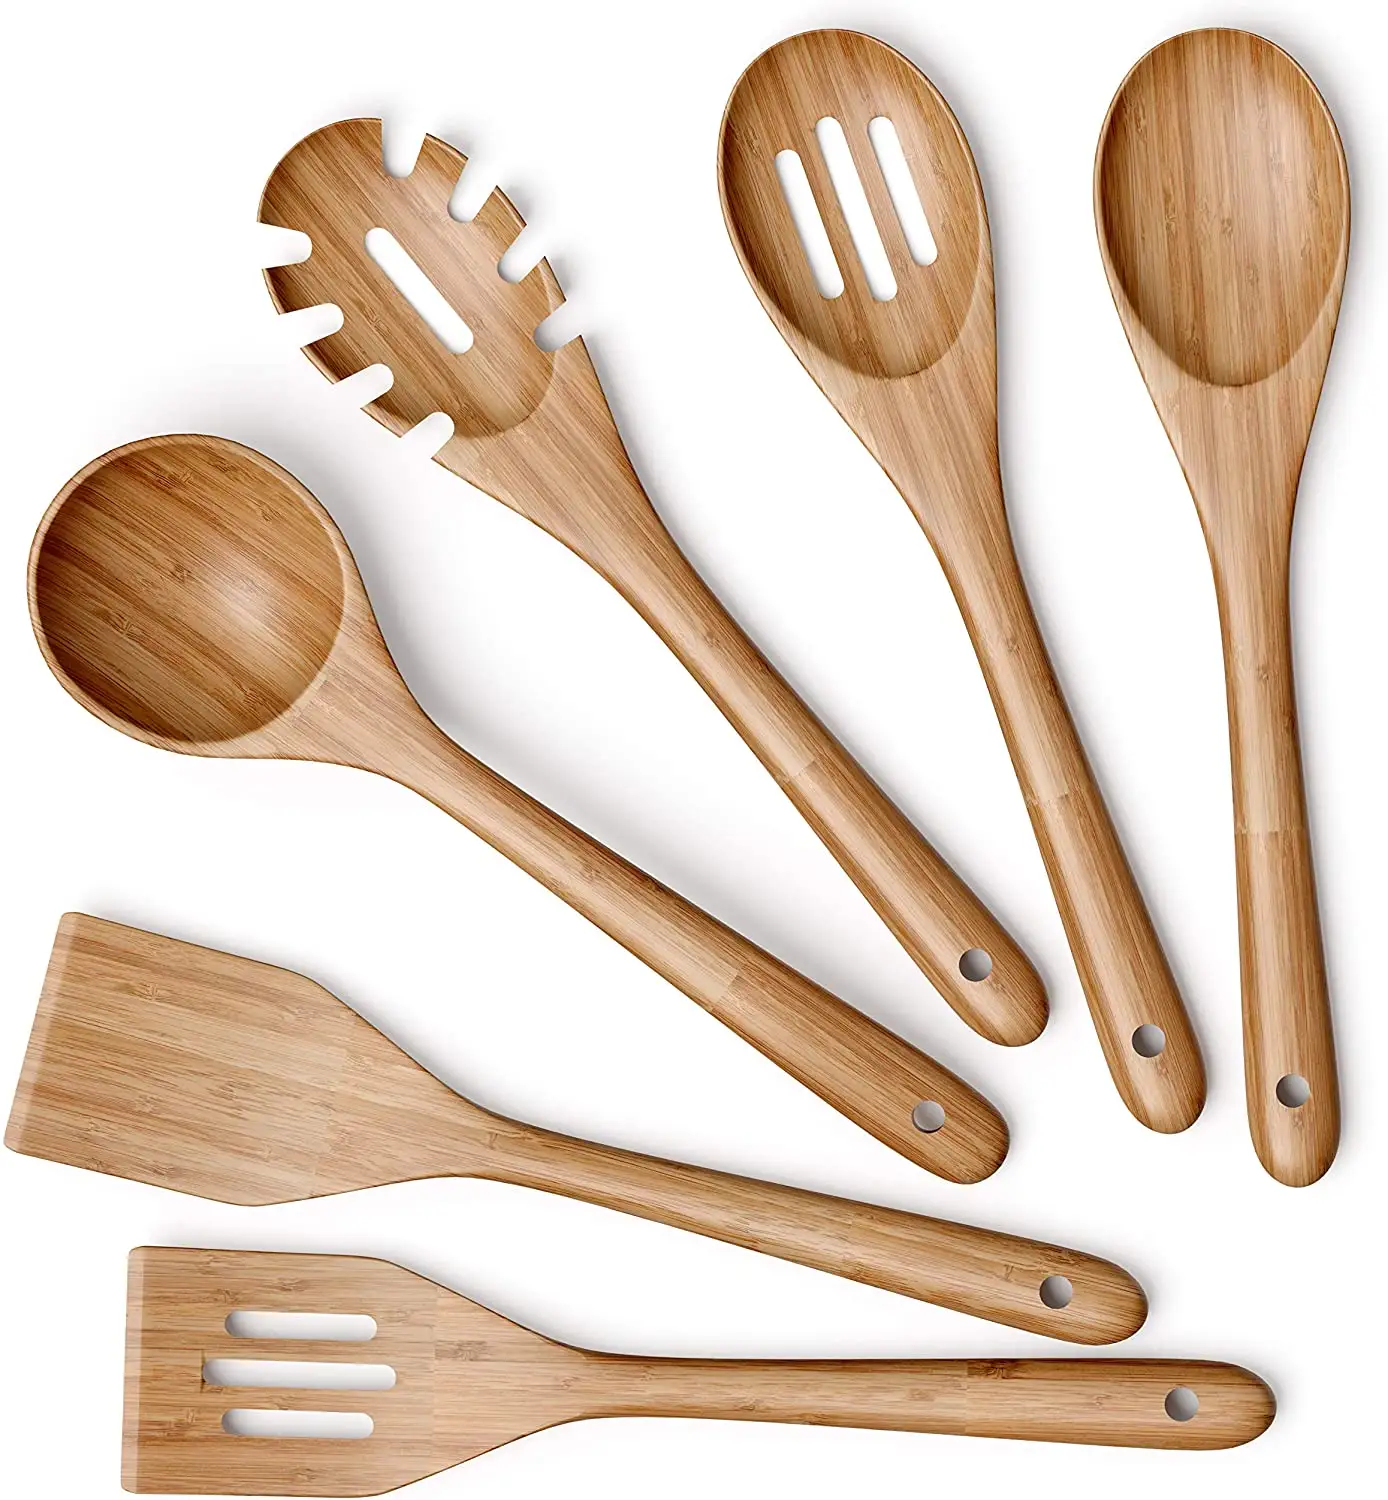 Wooden Kitchen Utensils Set - 6 Piece Non-Stick Bamboo Wooden Utensils for Cooking